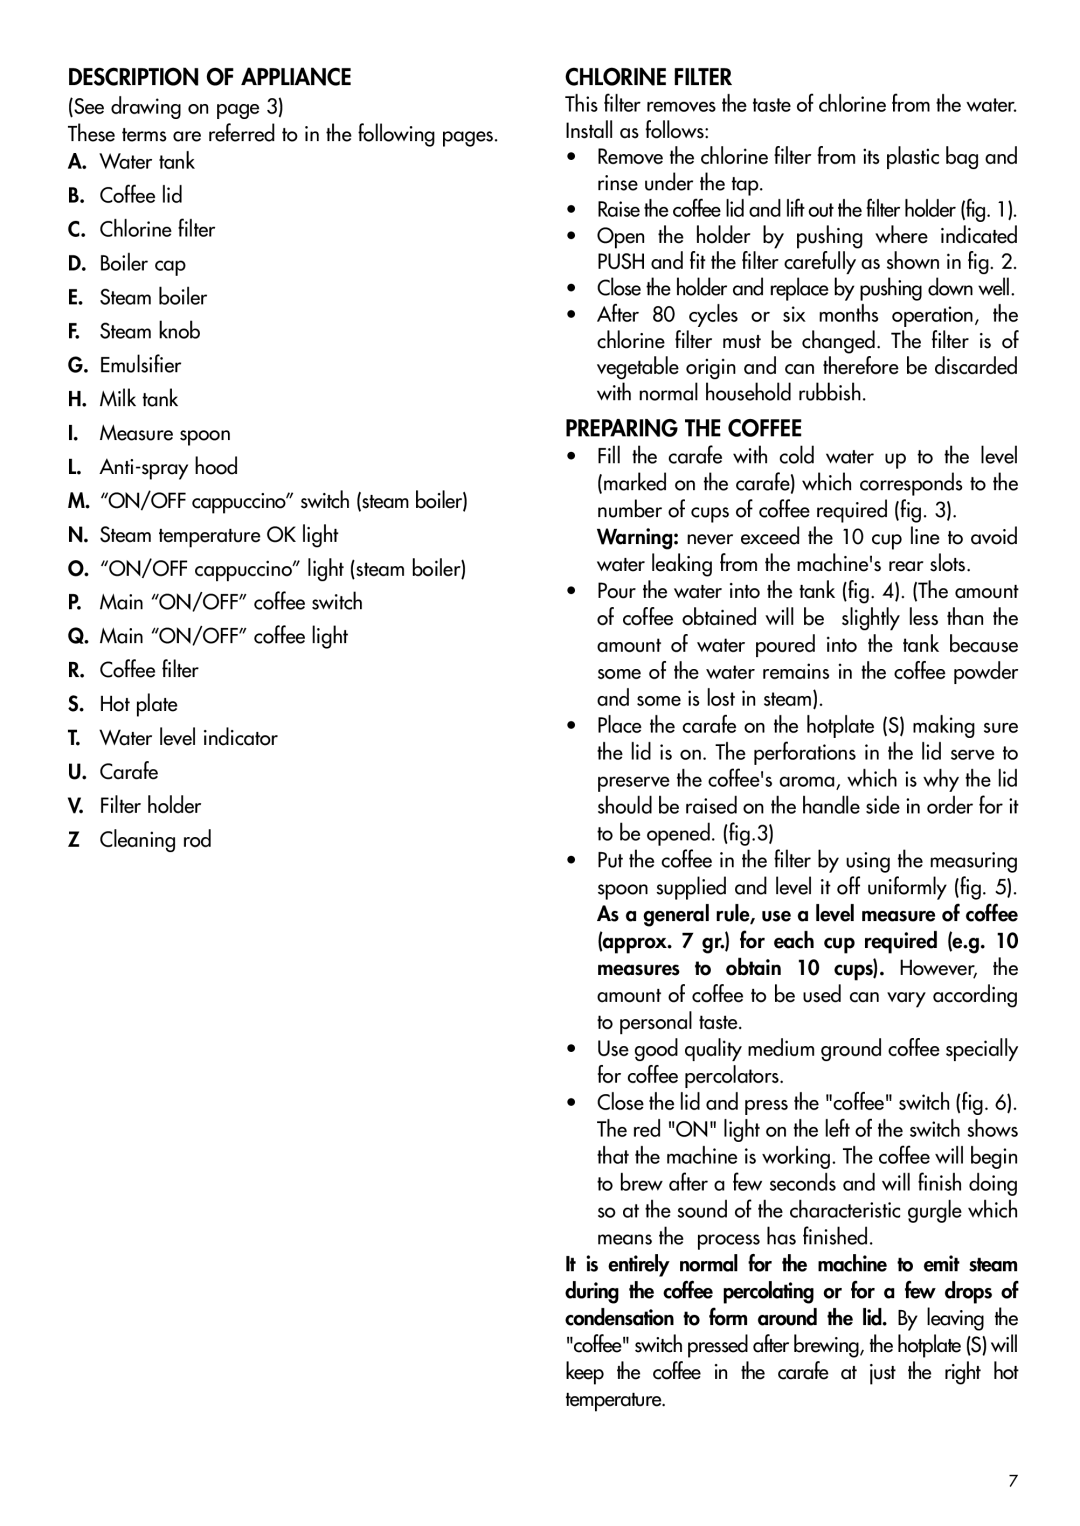 DeLonghi CC80 manual Description Of Appliance, Chlorine Filter, Preparing The Coffee 